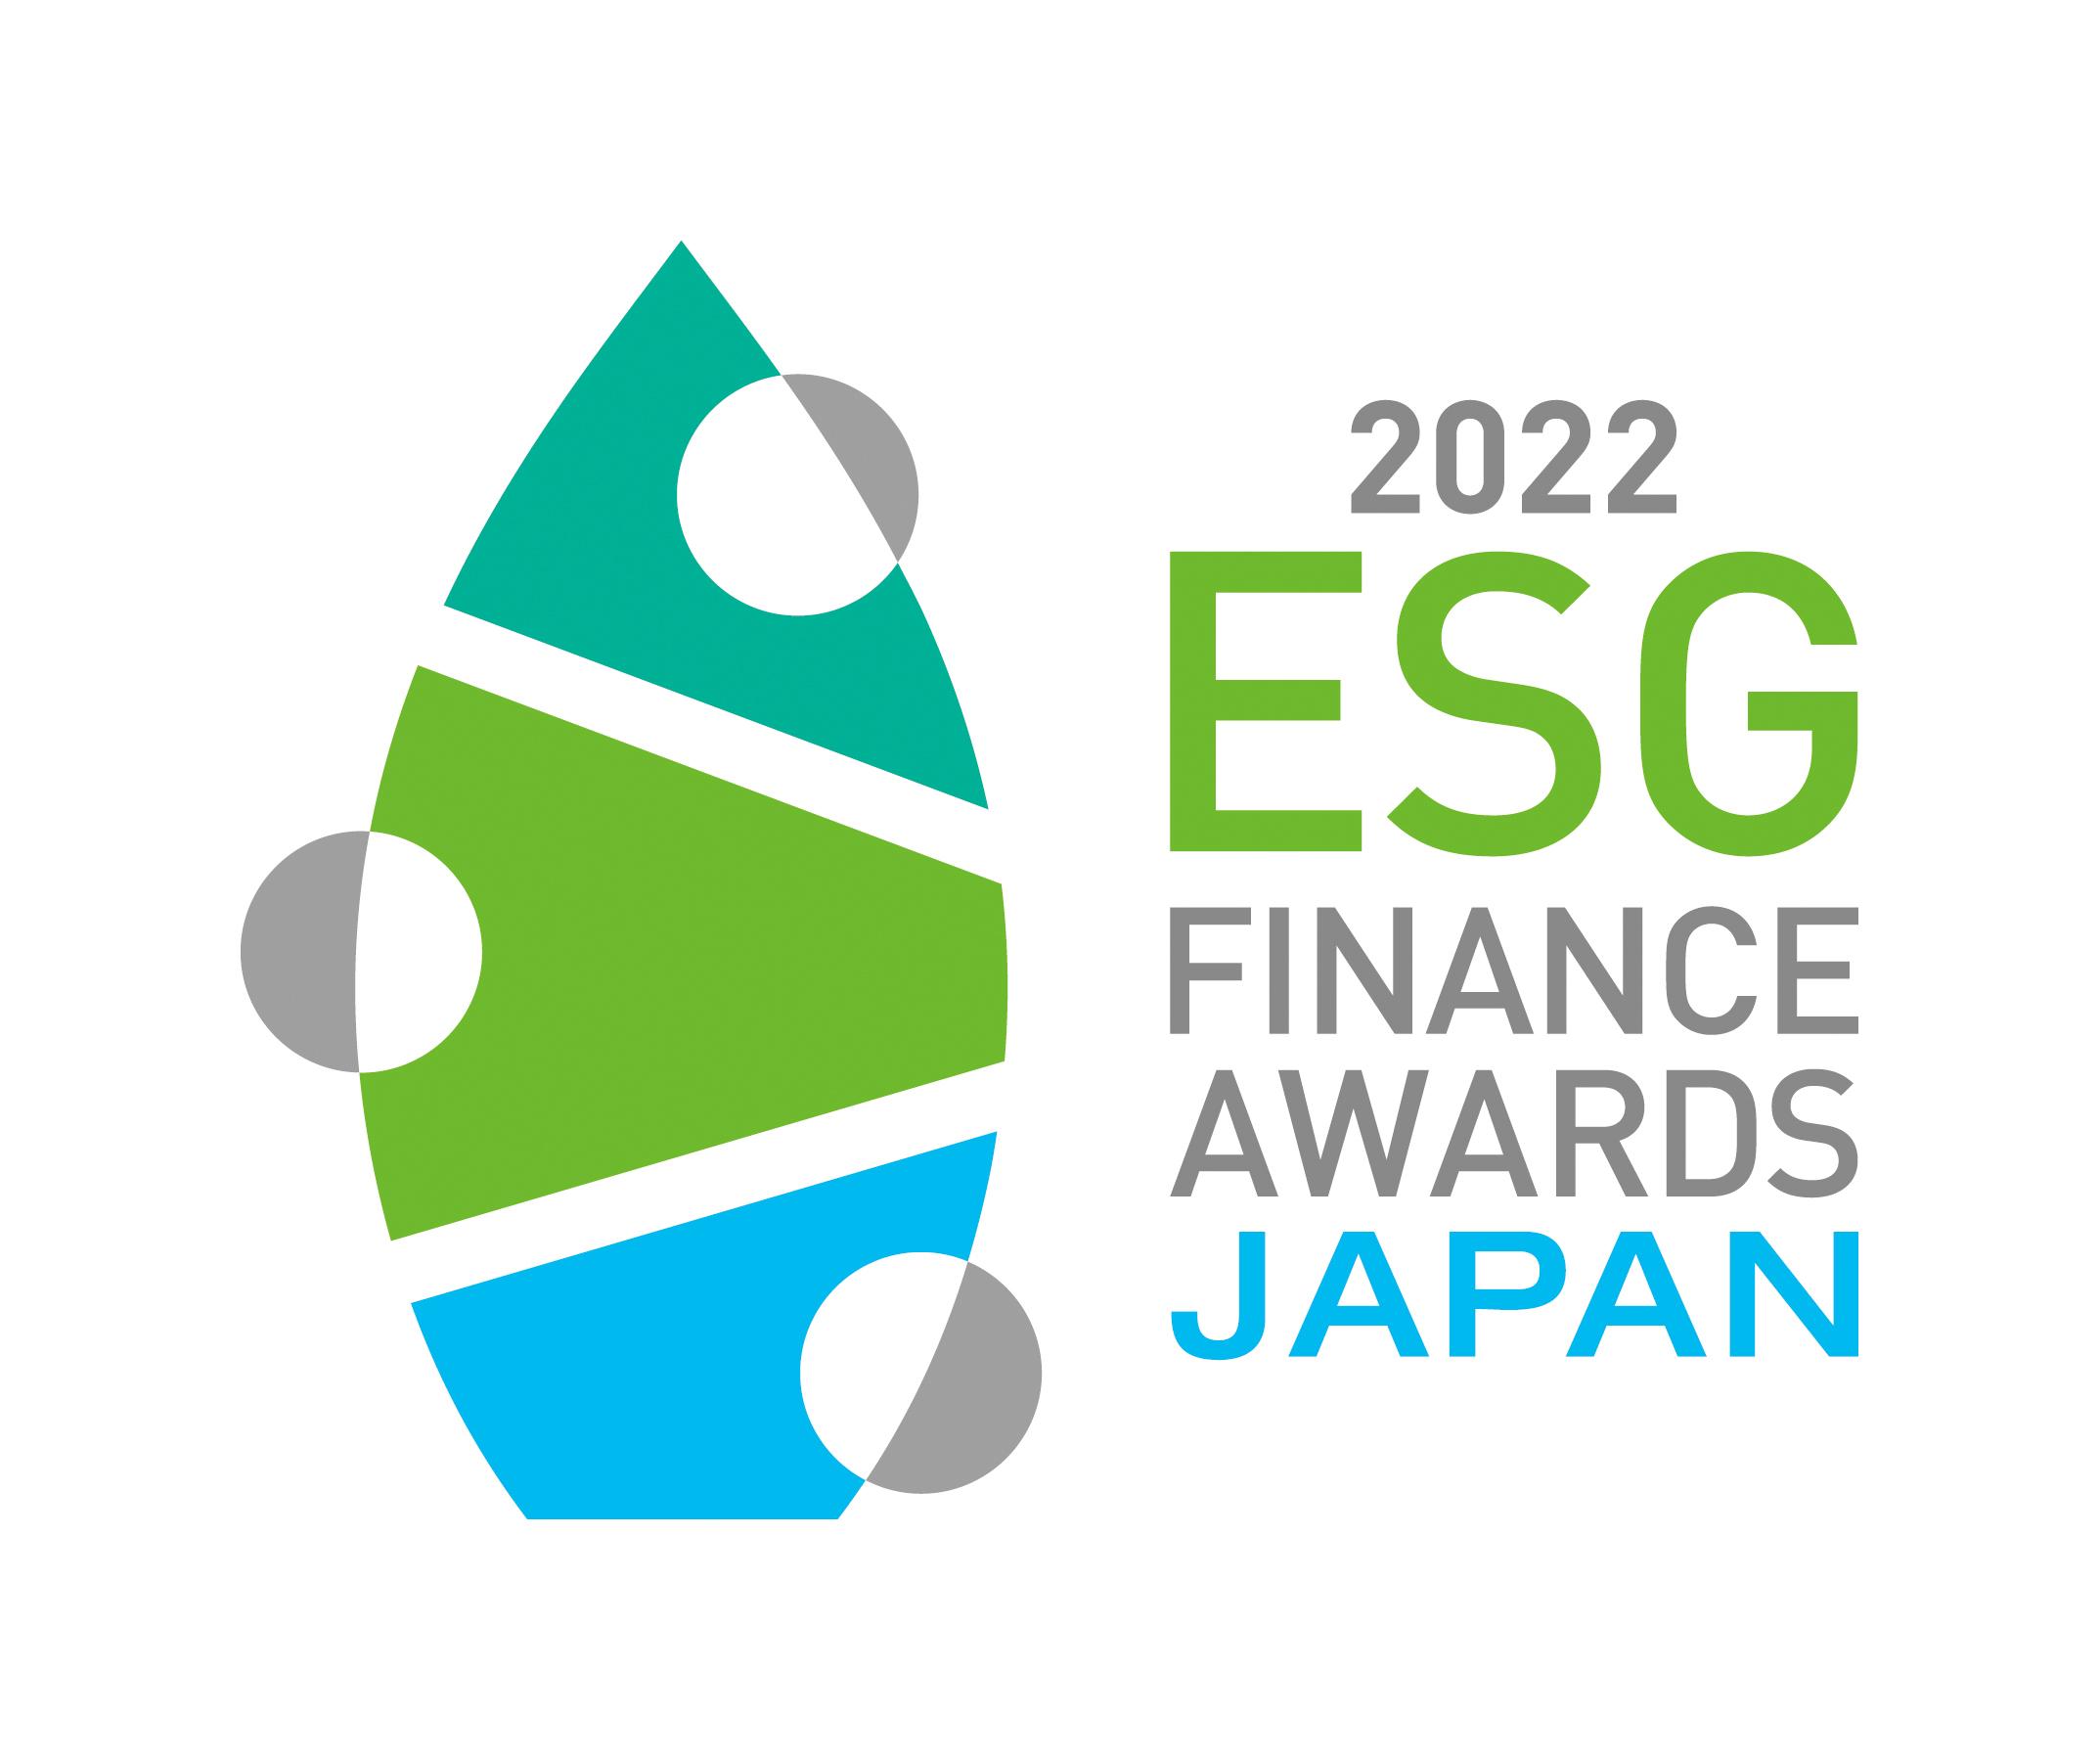 ESG Finance Awards Japan